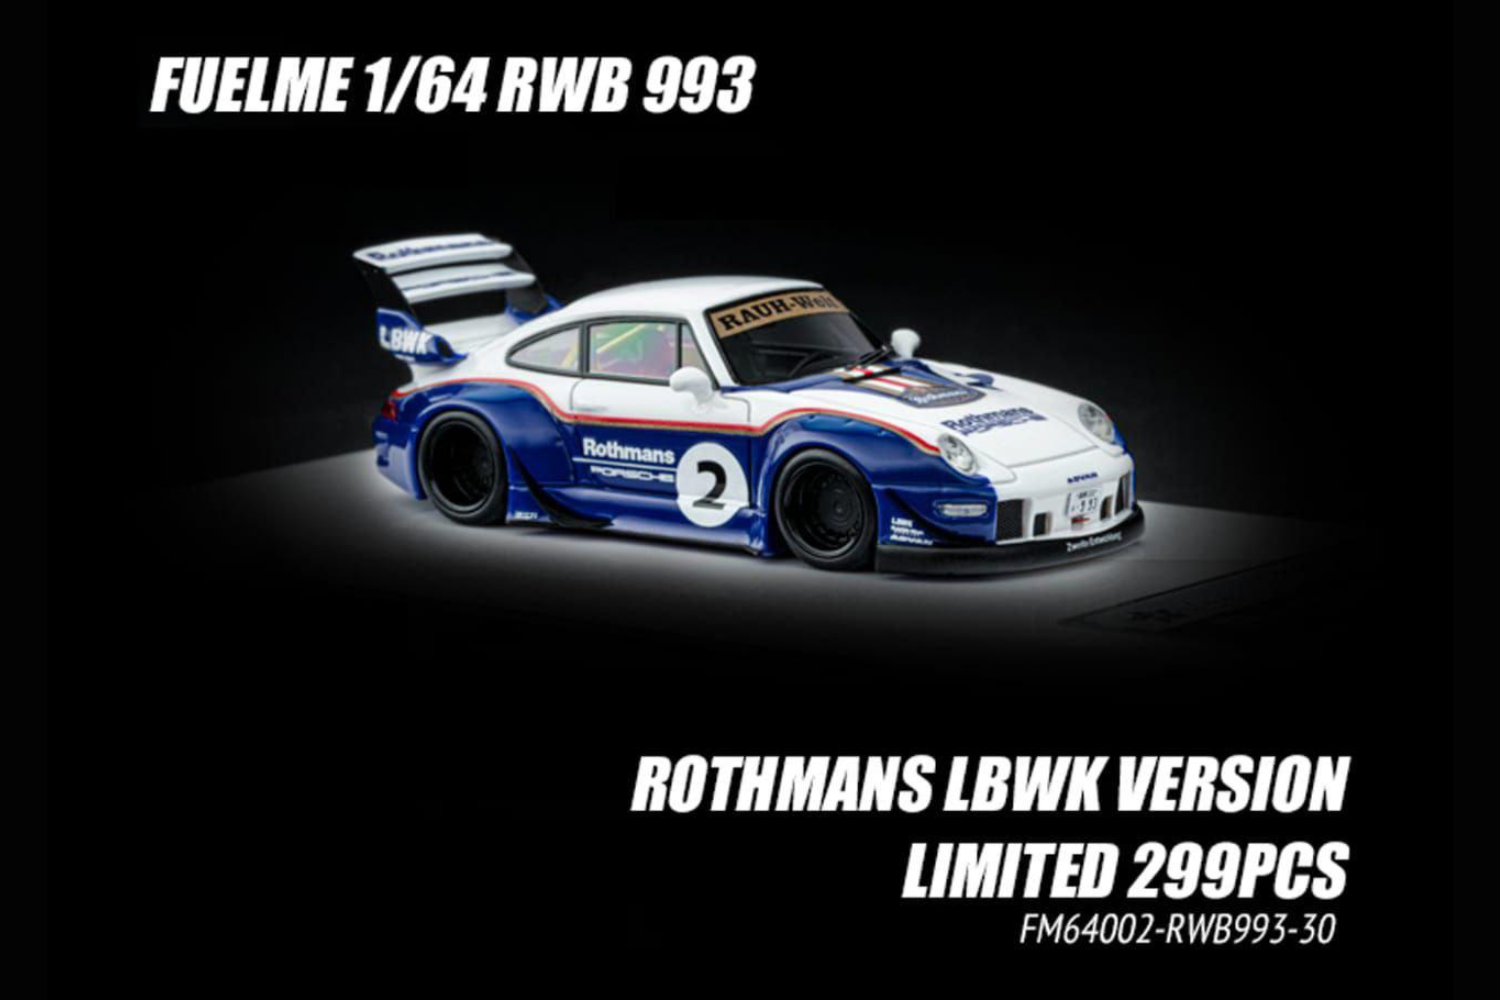 FuelMe 1/64 RWB993 Rothmans #2 LBWK Version